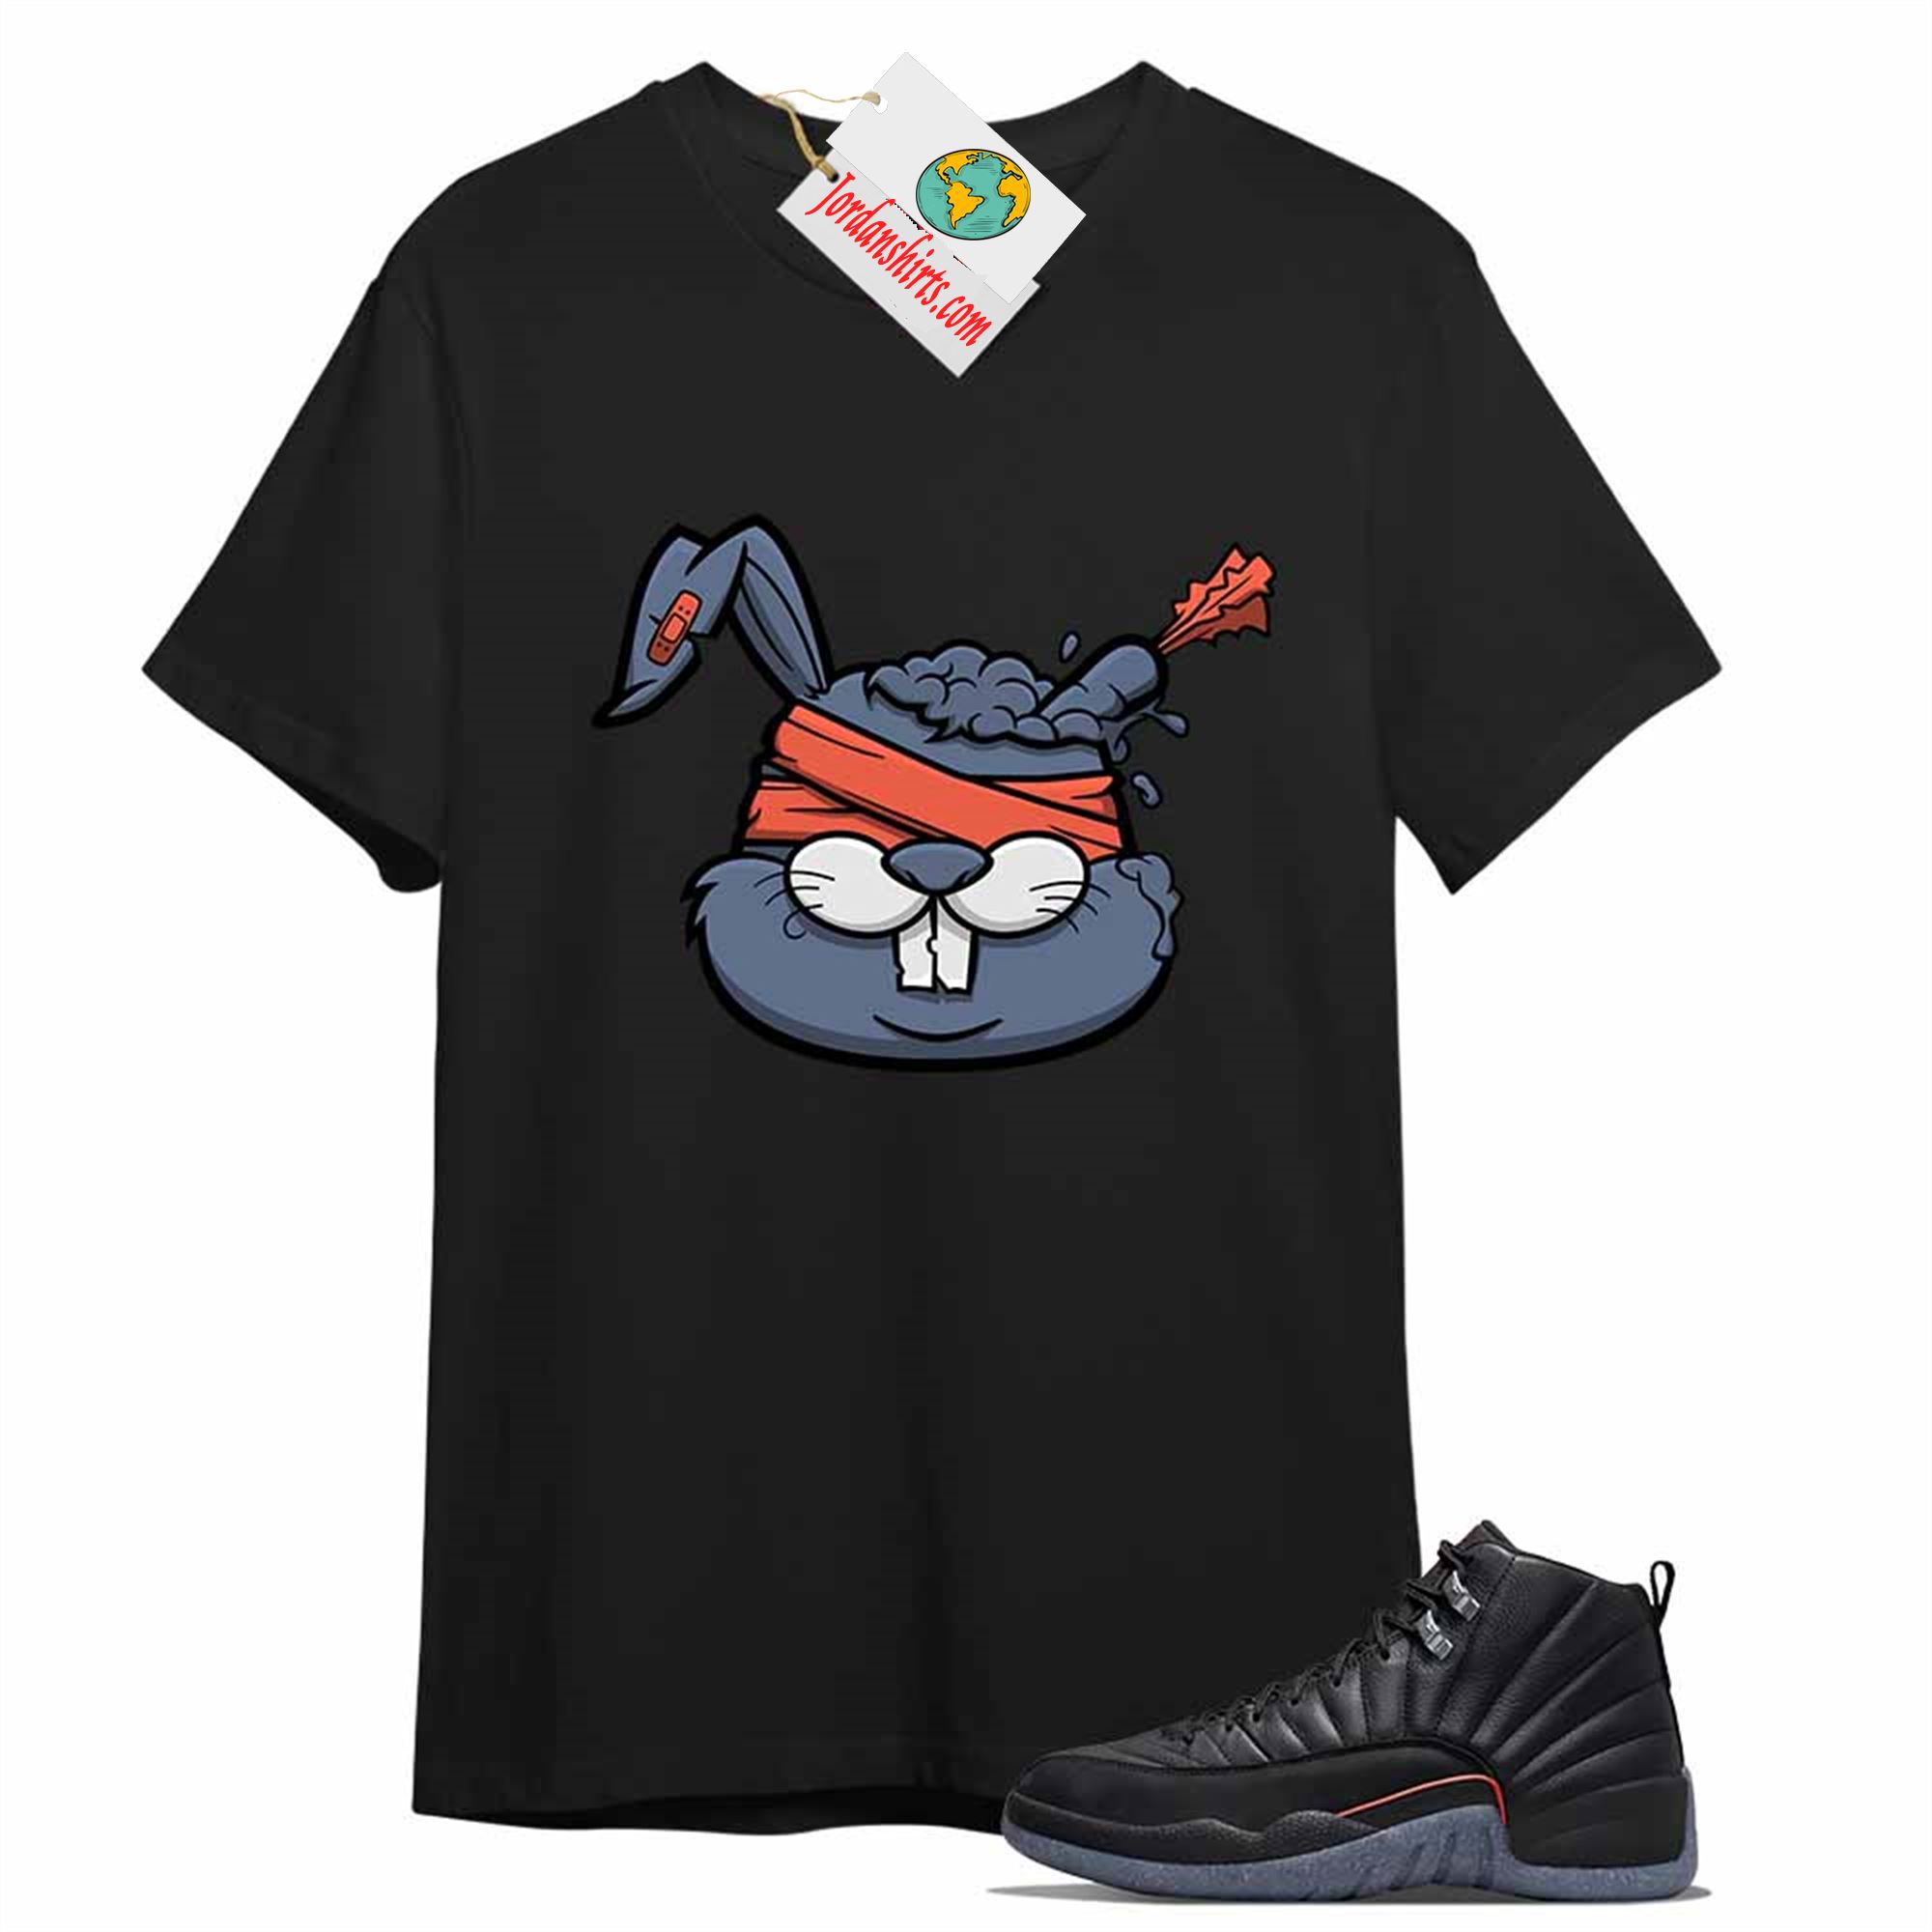 Jordan 12 Shirt, Zombie Bunny Black T-shirt Air Jordan 12 Utility Grind 12s Full Size Up To 5xl